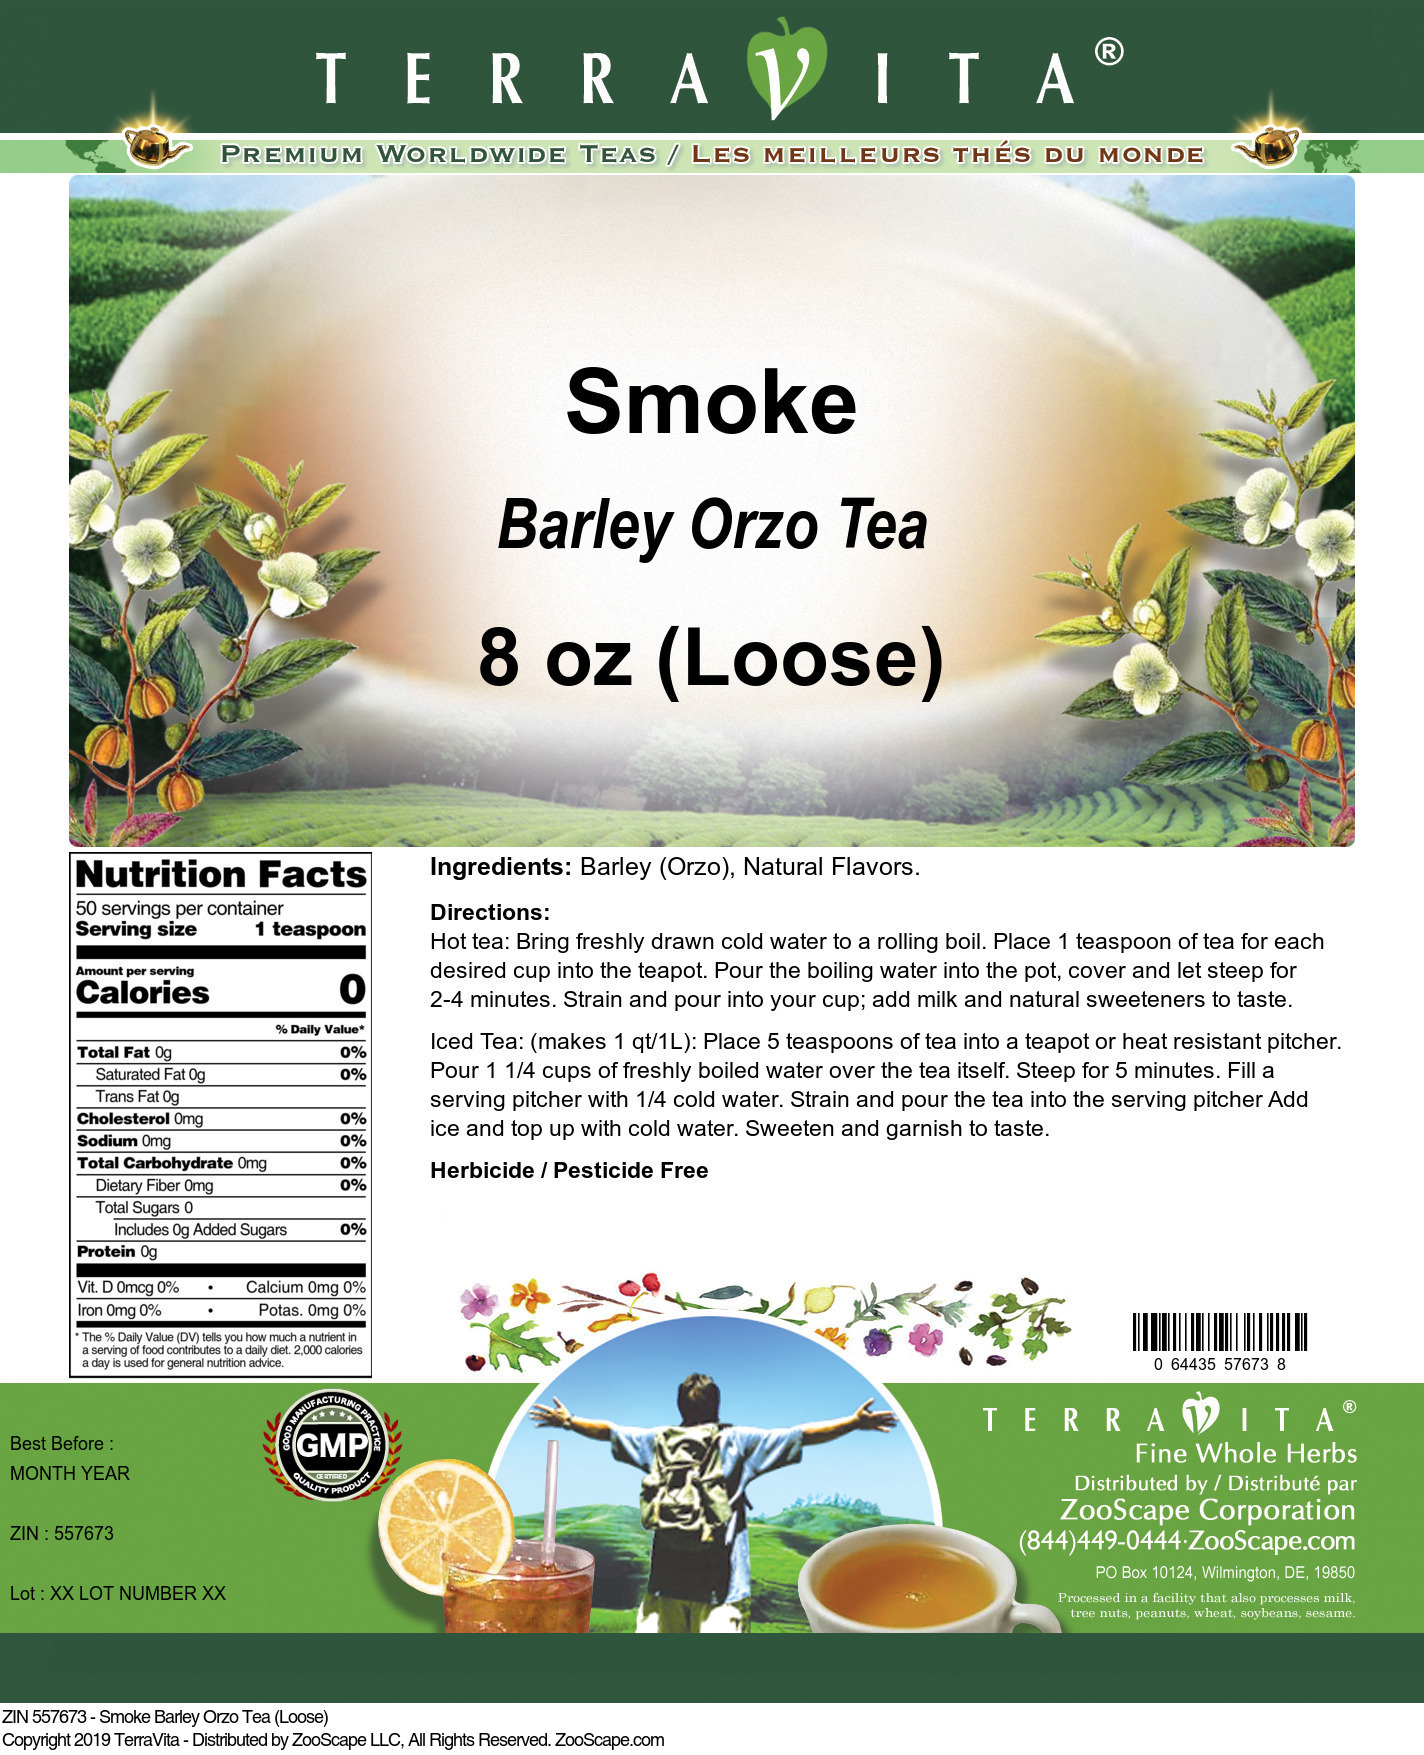 Smoke Barley Orzo Tea (Loose) - Label